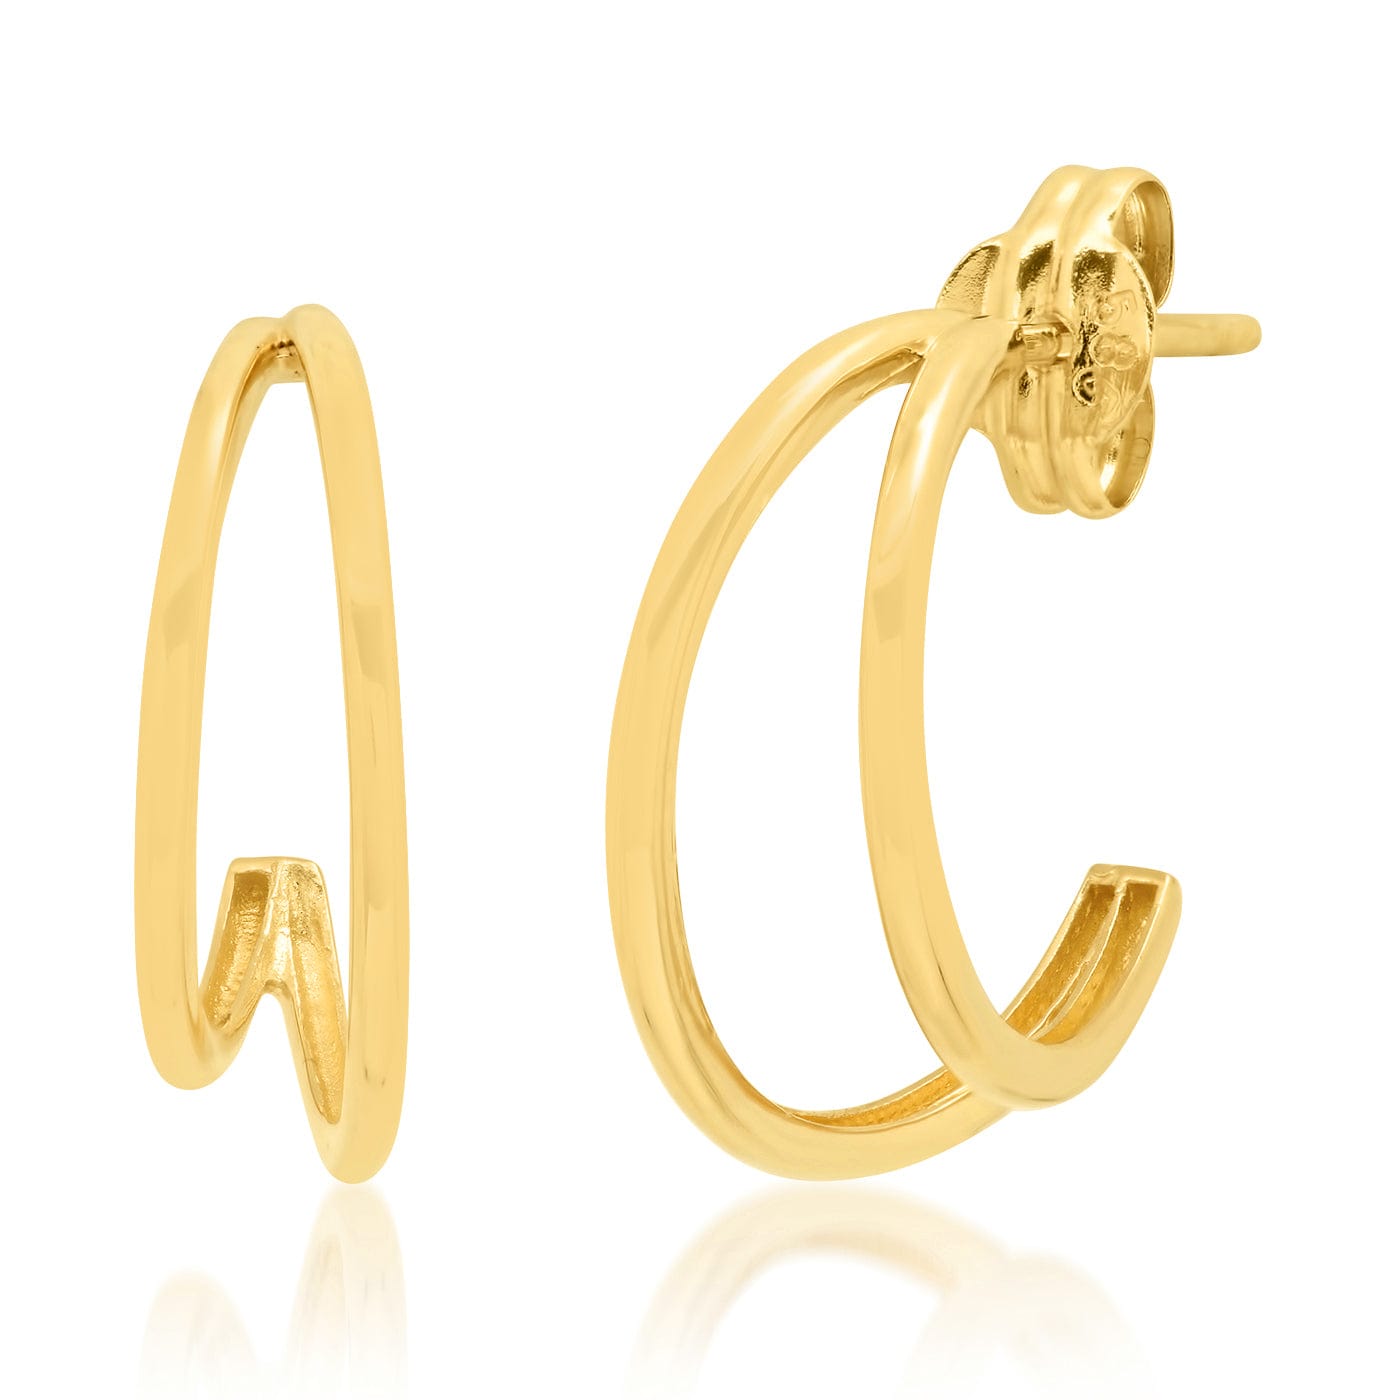 TAI JEWELRY Earrings 14k Gold 14k Crescent Double Hoops